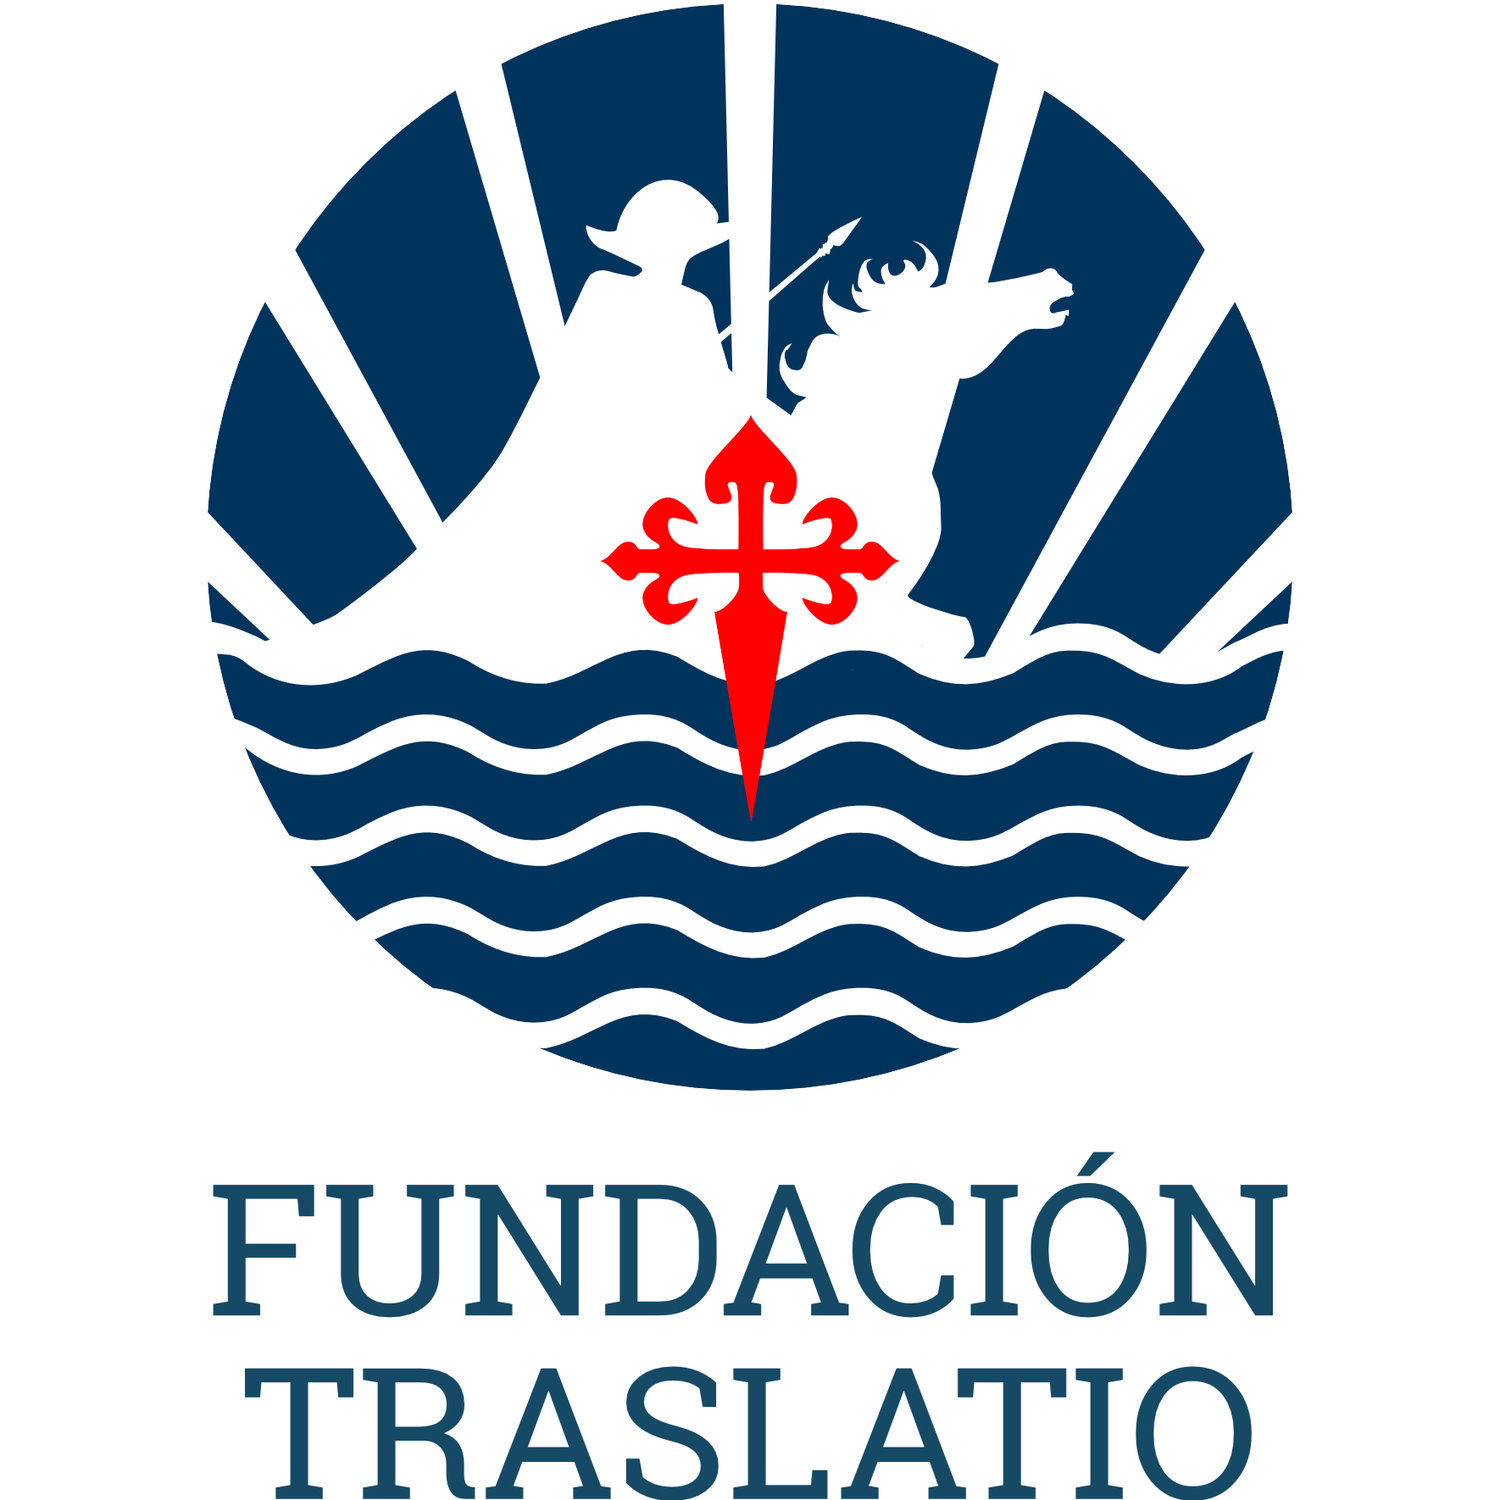 www.fundaciontraslatio.org